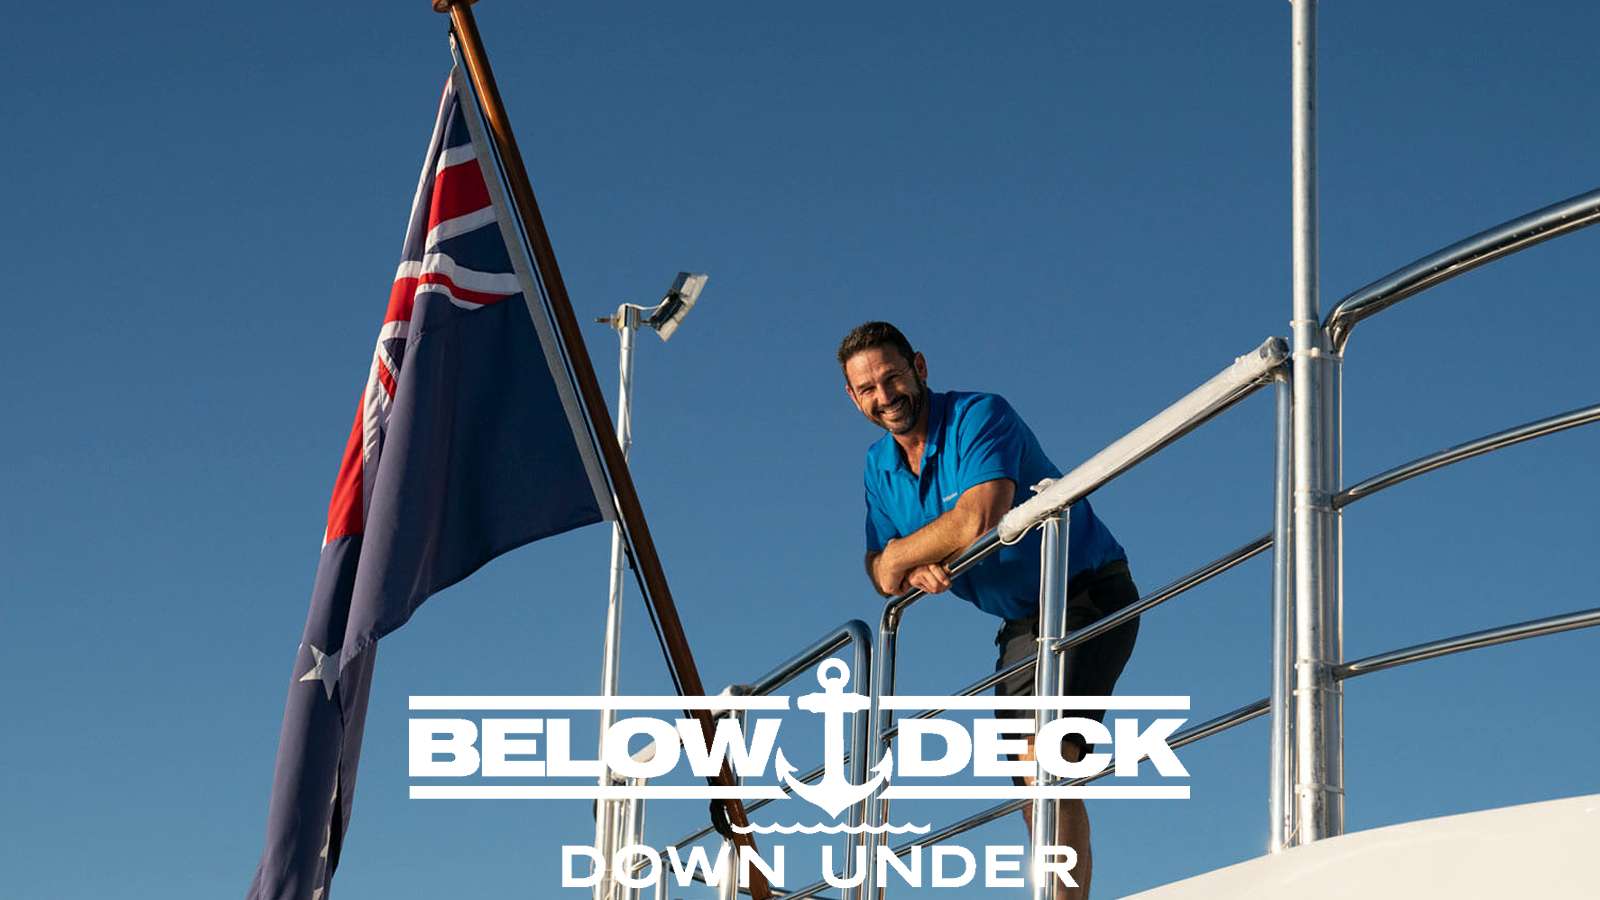 Where is Below Deck Down Under season 2 filmed